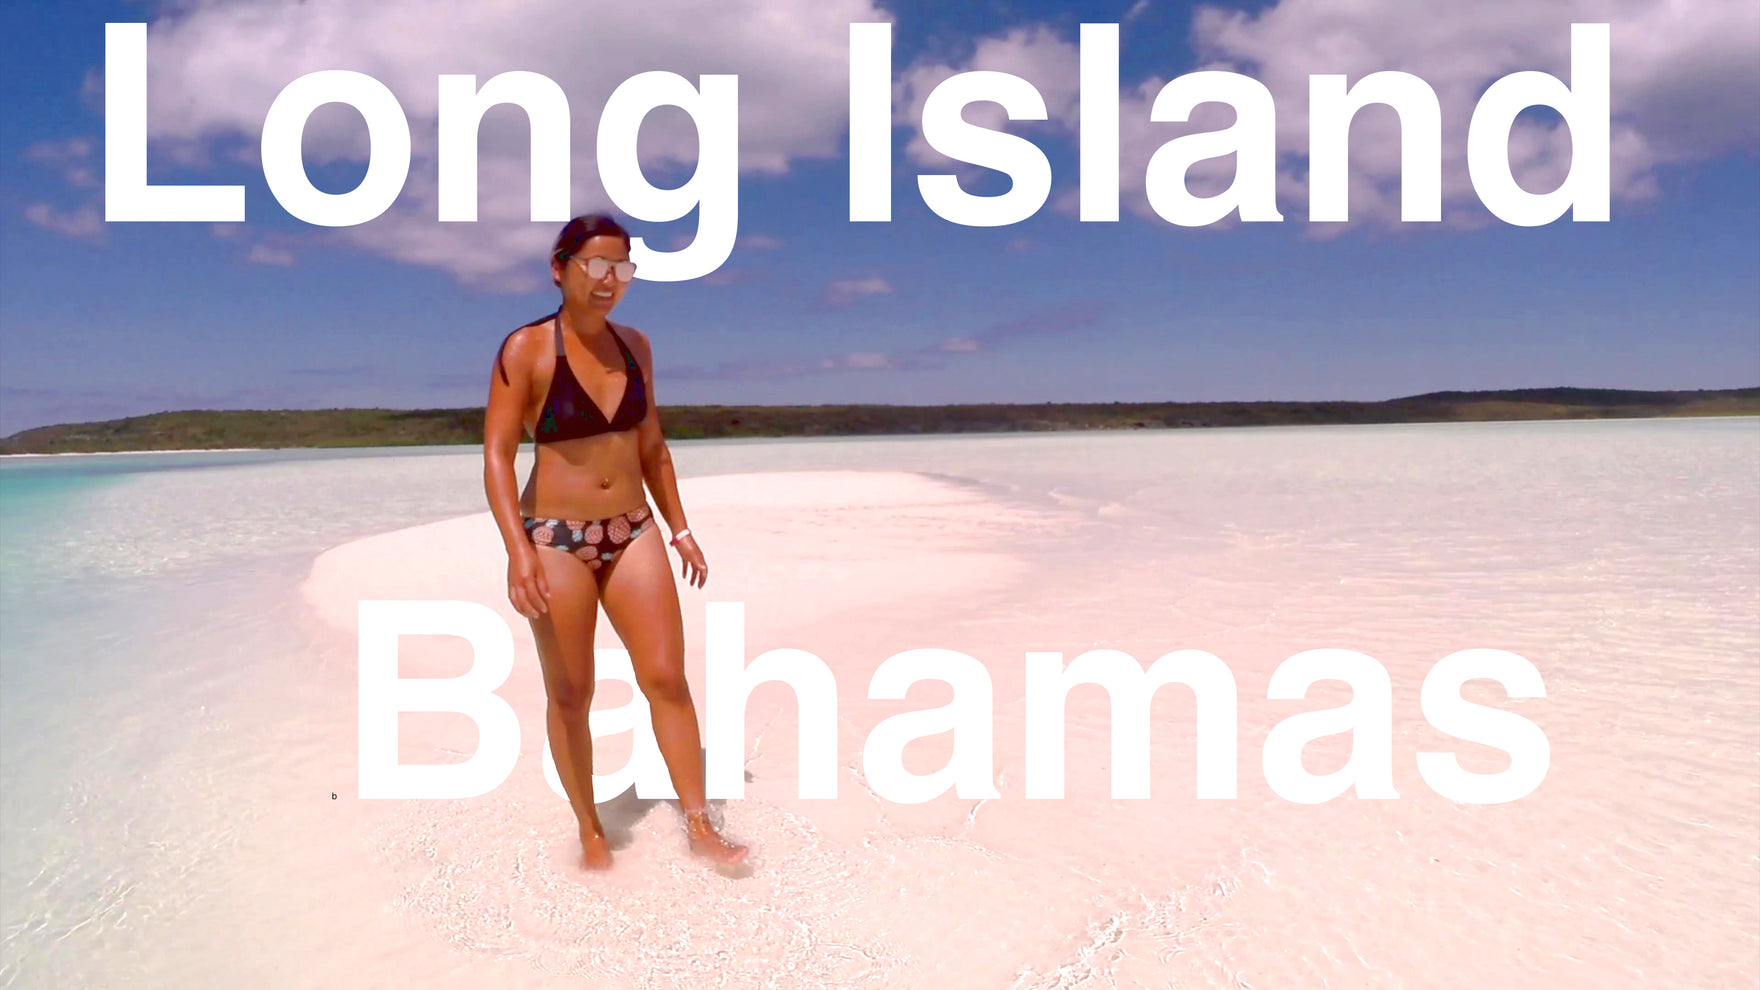 Episode 30 - Long Island, Bahamas